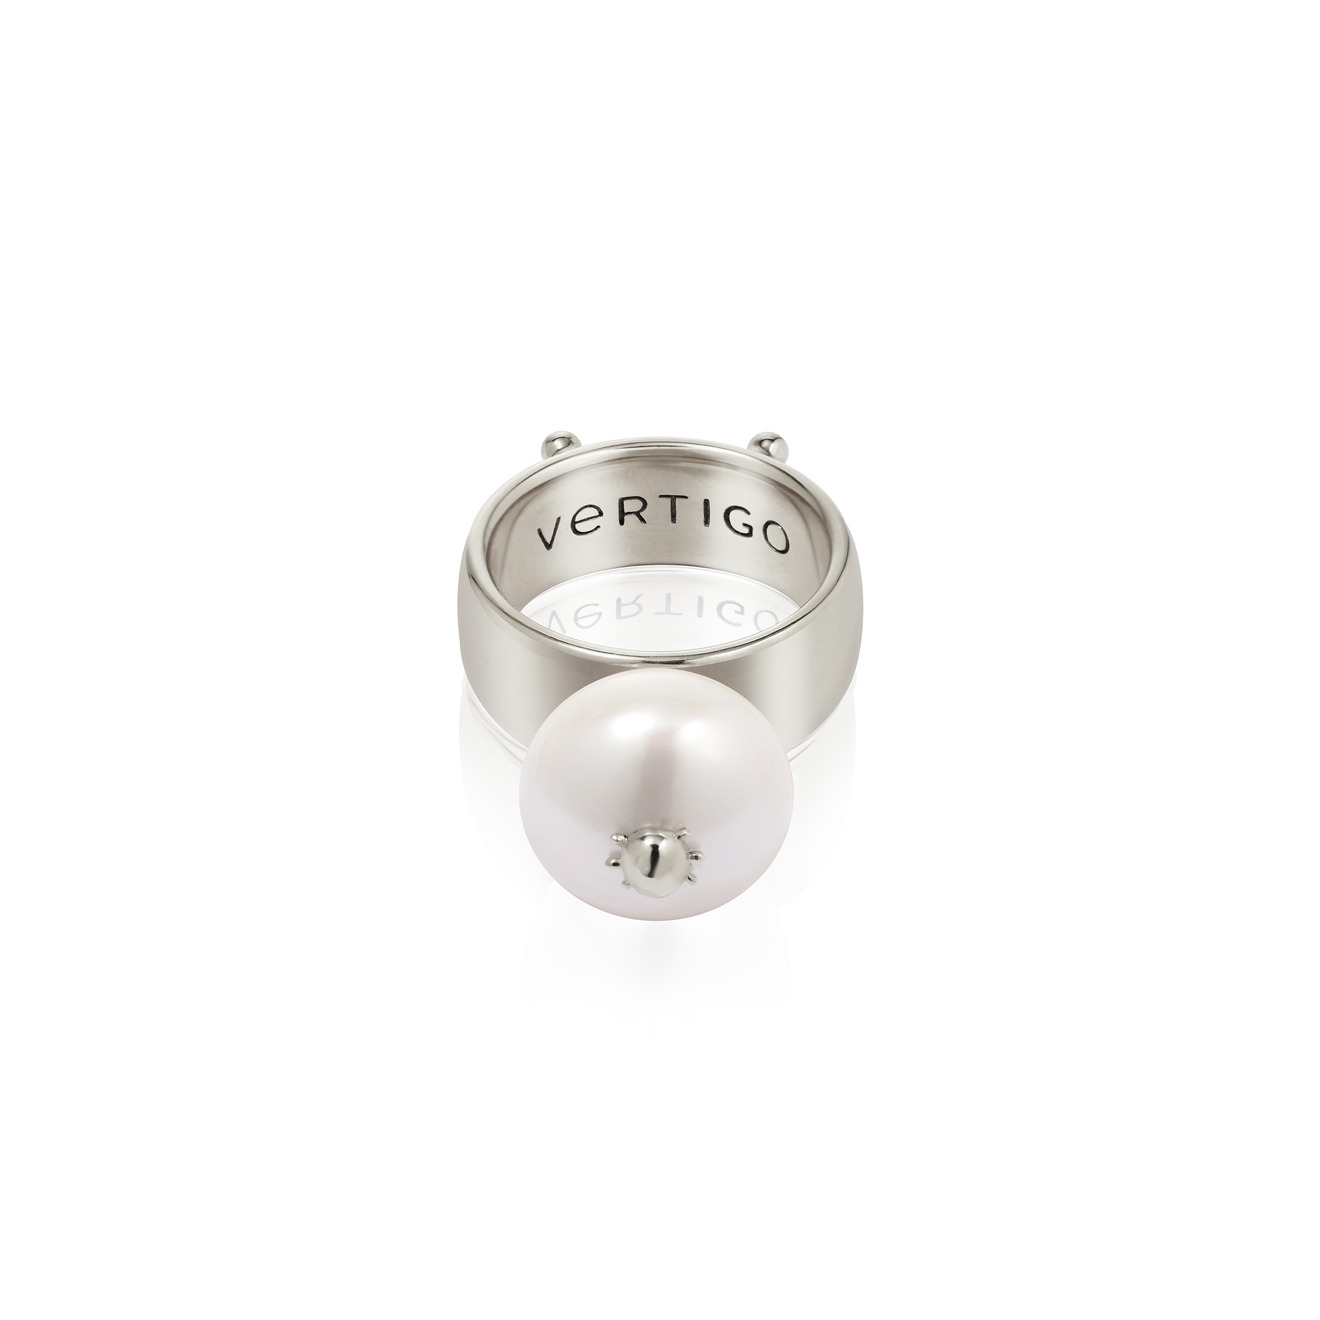 Vertigo Jewellery Lab Кольцо СLEOPTR LADYBUG RING из серебра с речным жемчугом vertigo jewellery lab кольцо сleoptr из серебра